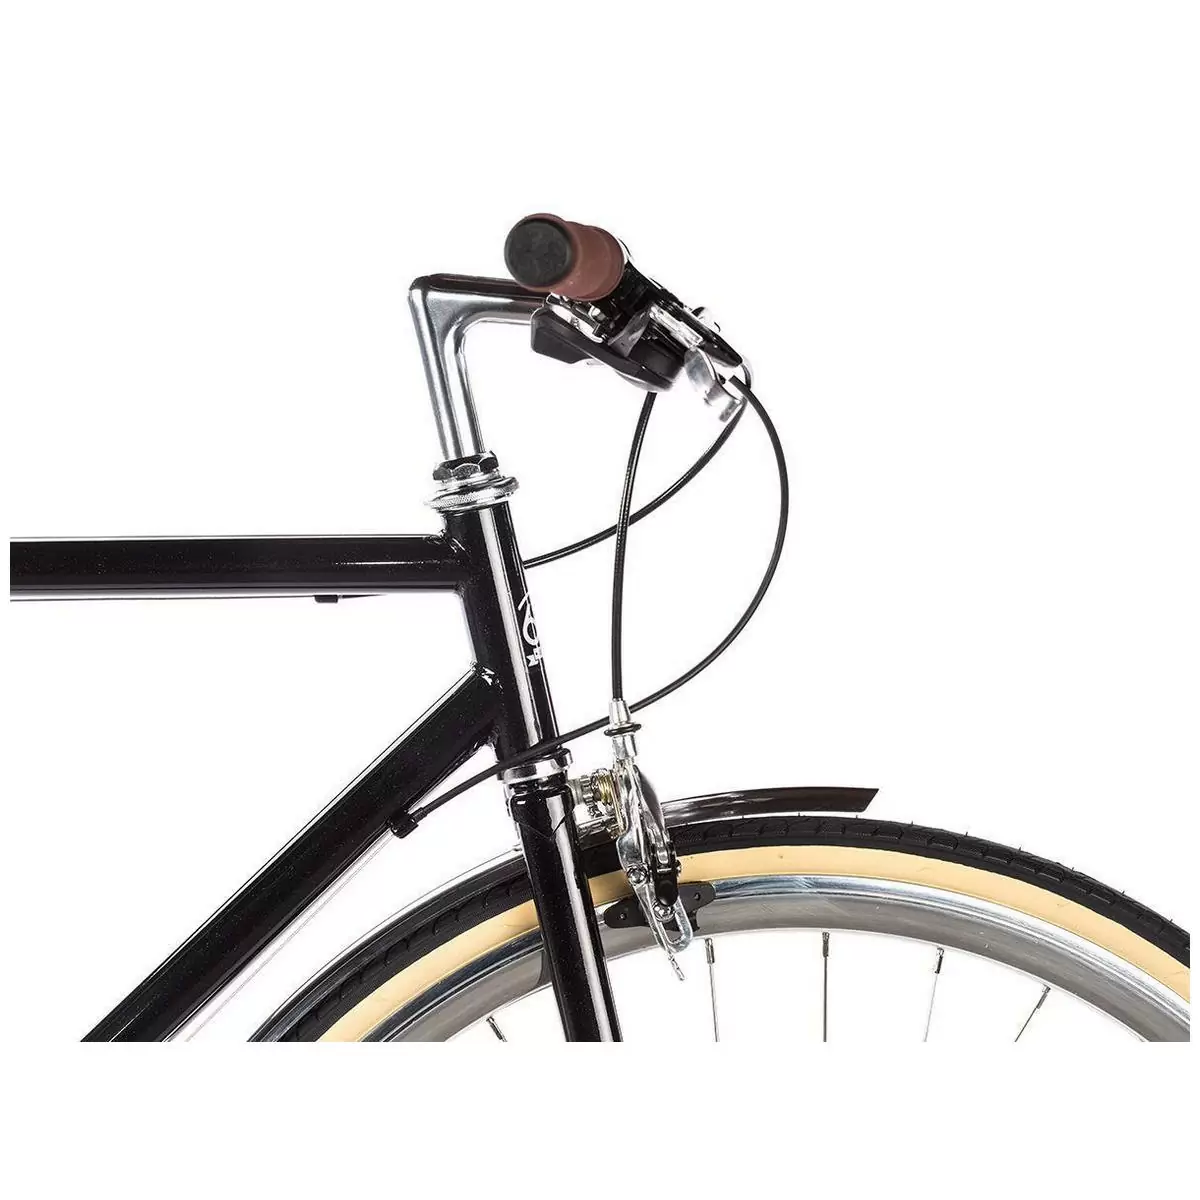 City bike ODYSSEY 8spd Delano black large 58cm #3